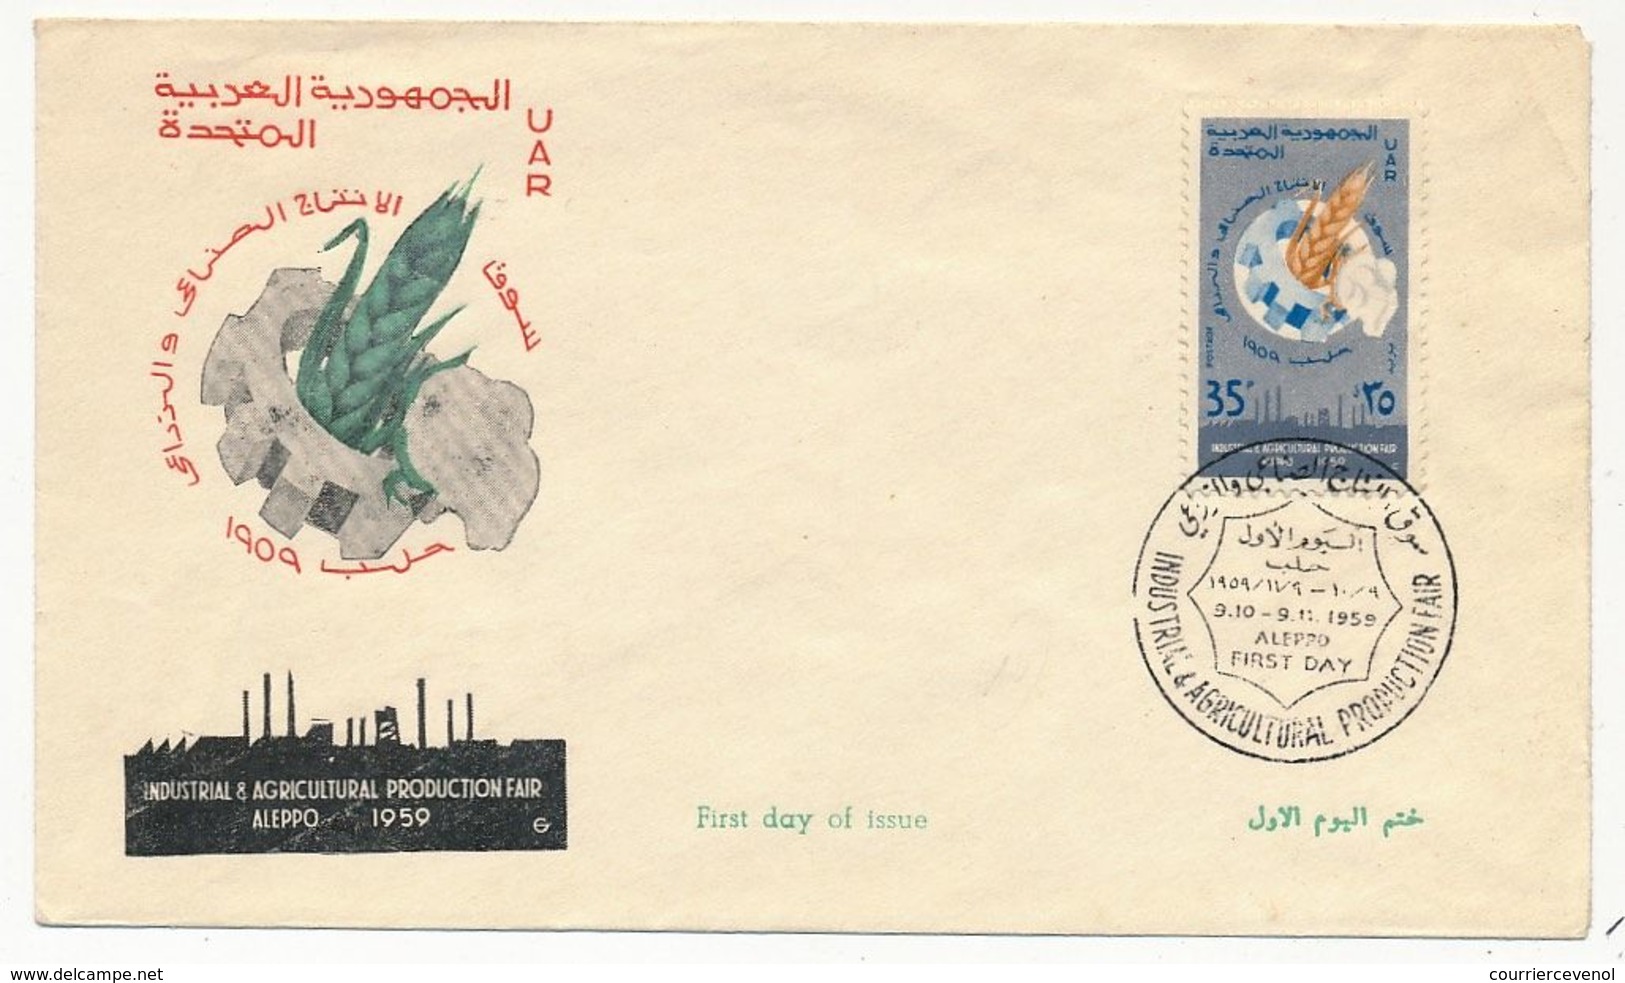 EGYPTE UAR - FDC - Industrial & Agricultural Fair 1959 - Le Caire - 9/11/1959 - Storia Postale